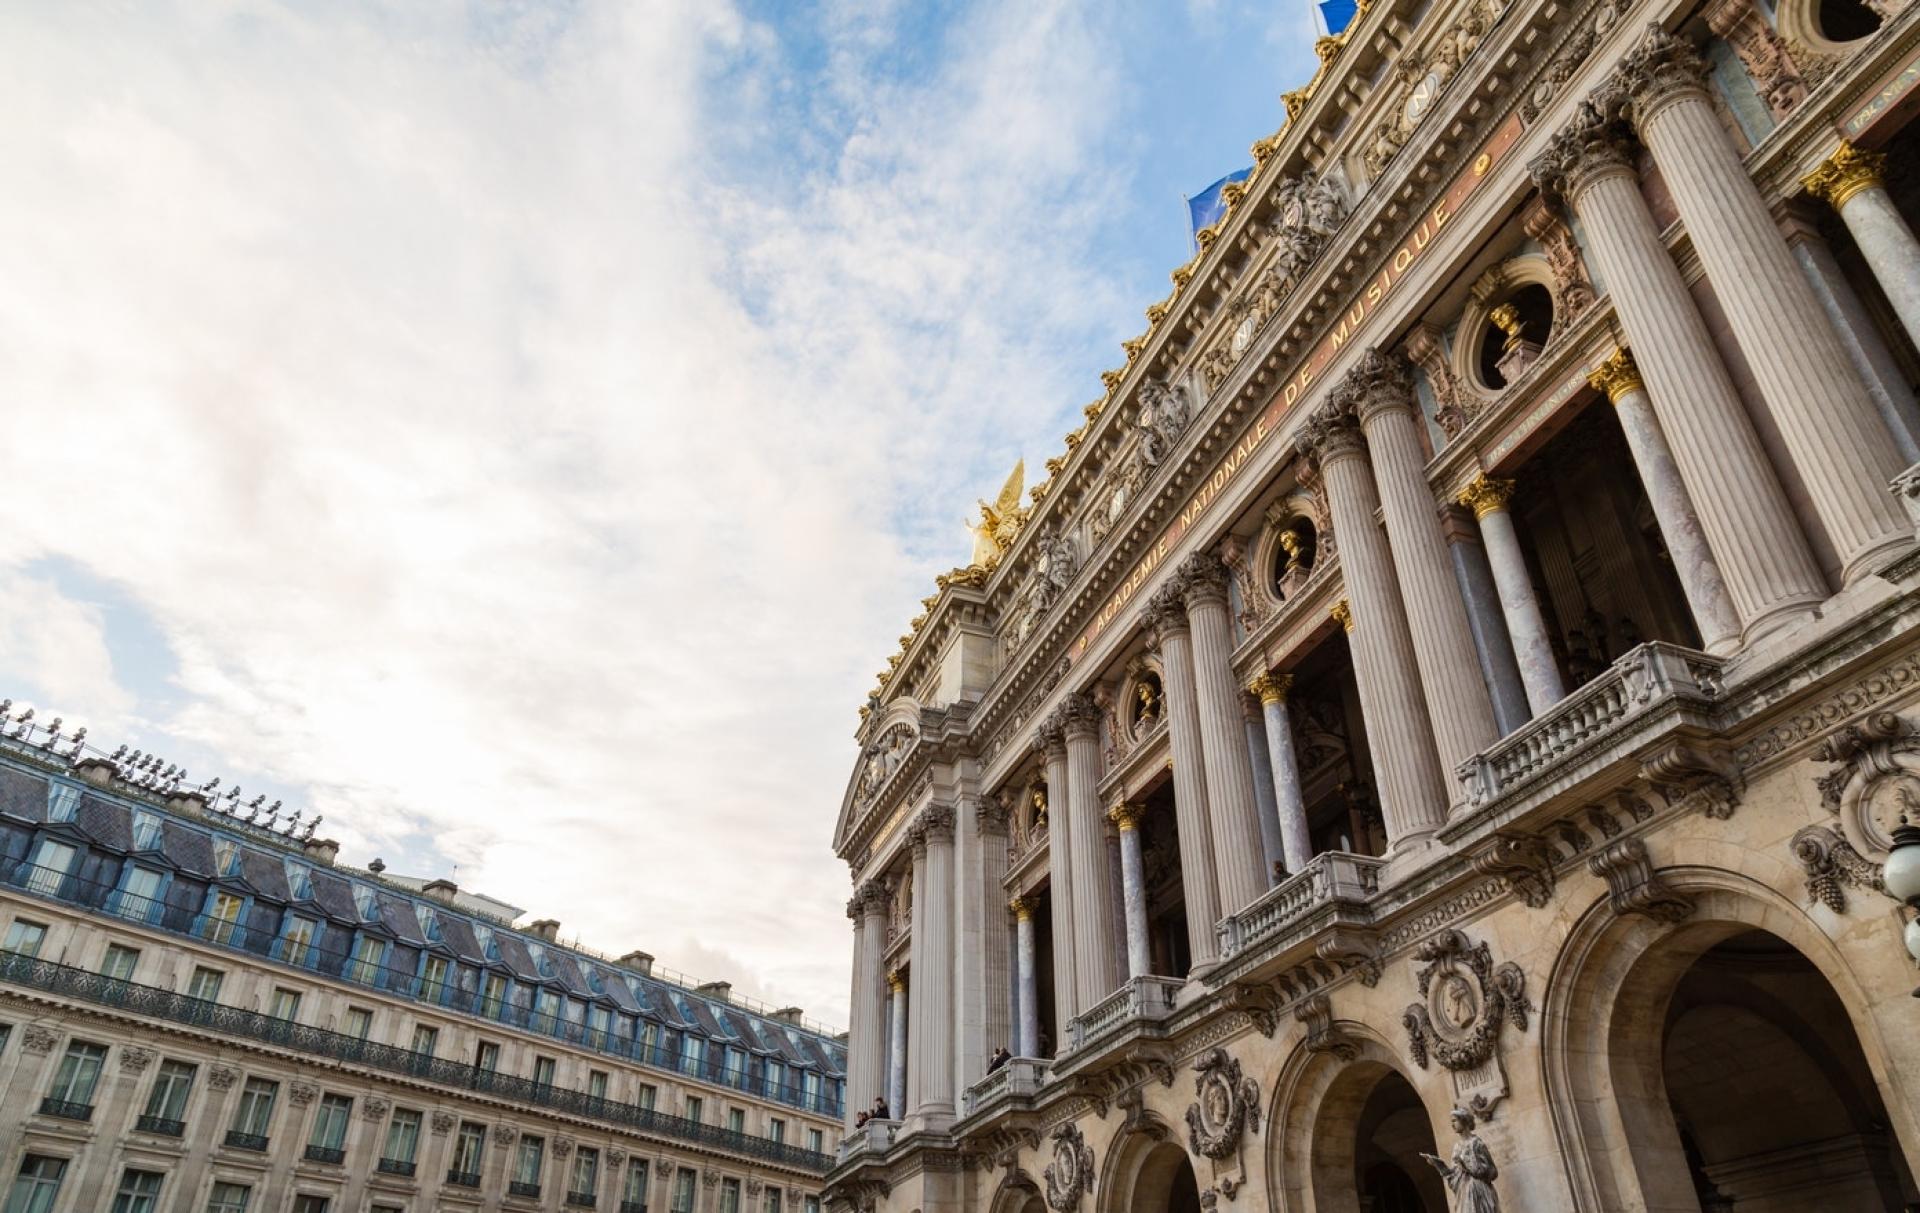 The Opera Garnier opens its doors to you